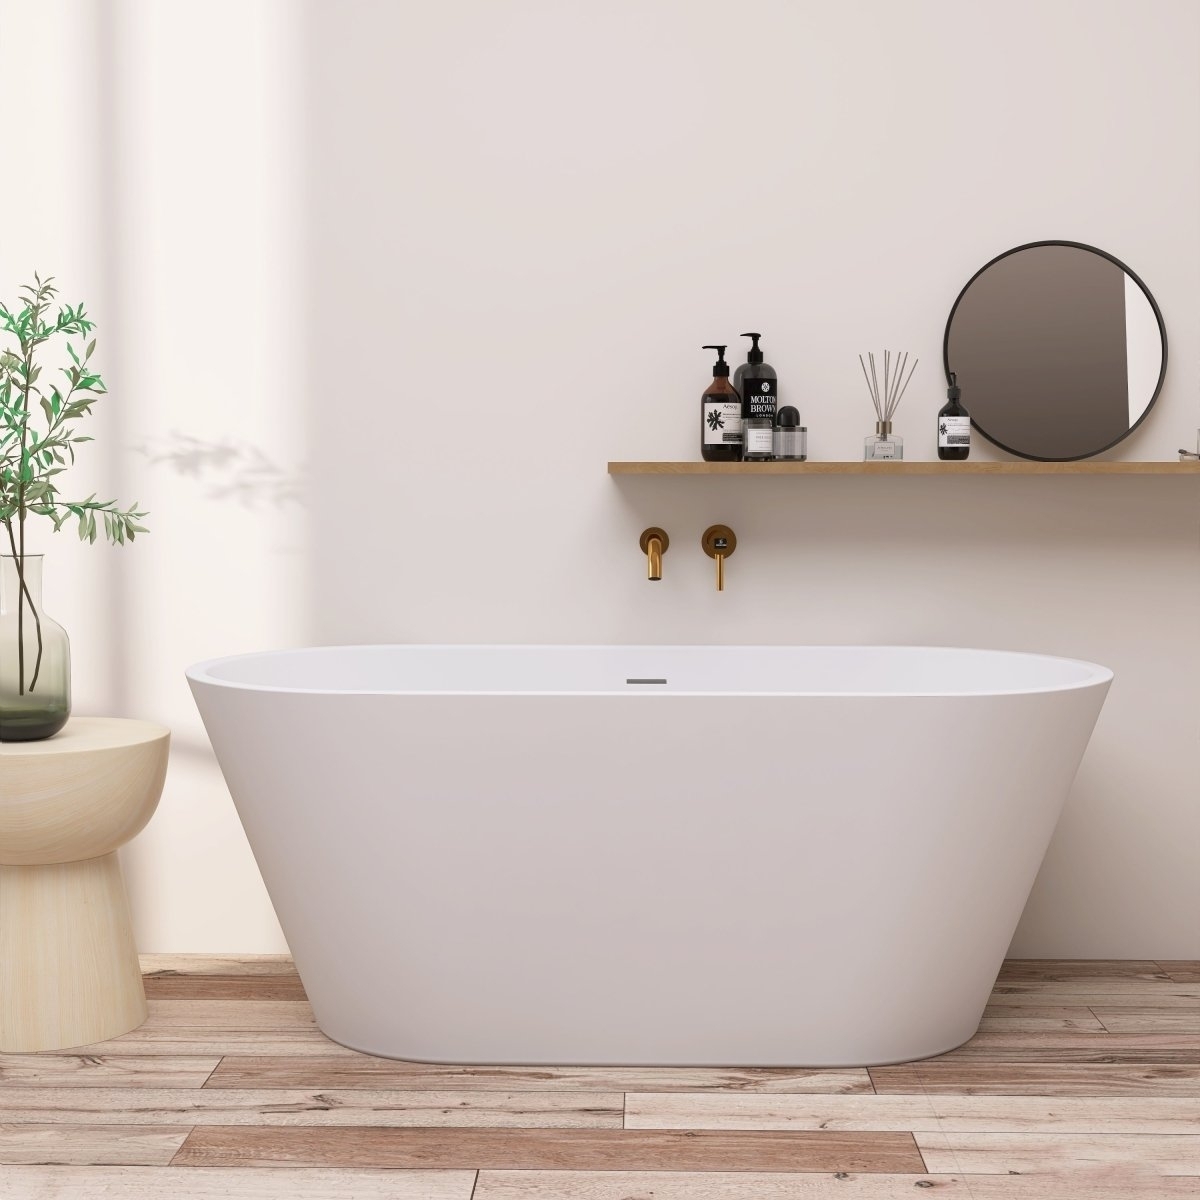 ExBrite 63 Acrylic Free Standing Tub Classic Oval Shape Soaking Tub, Adjustable Freestanding Bathtubs Gloss White